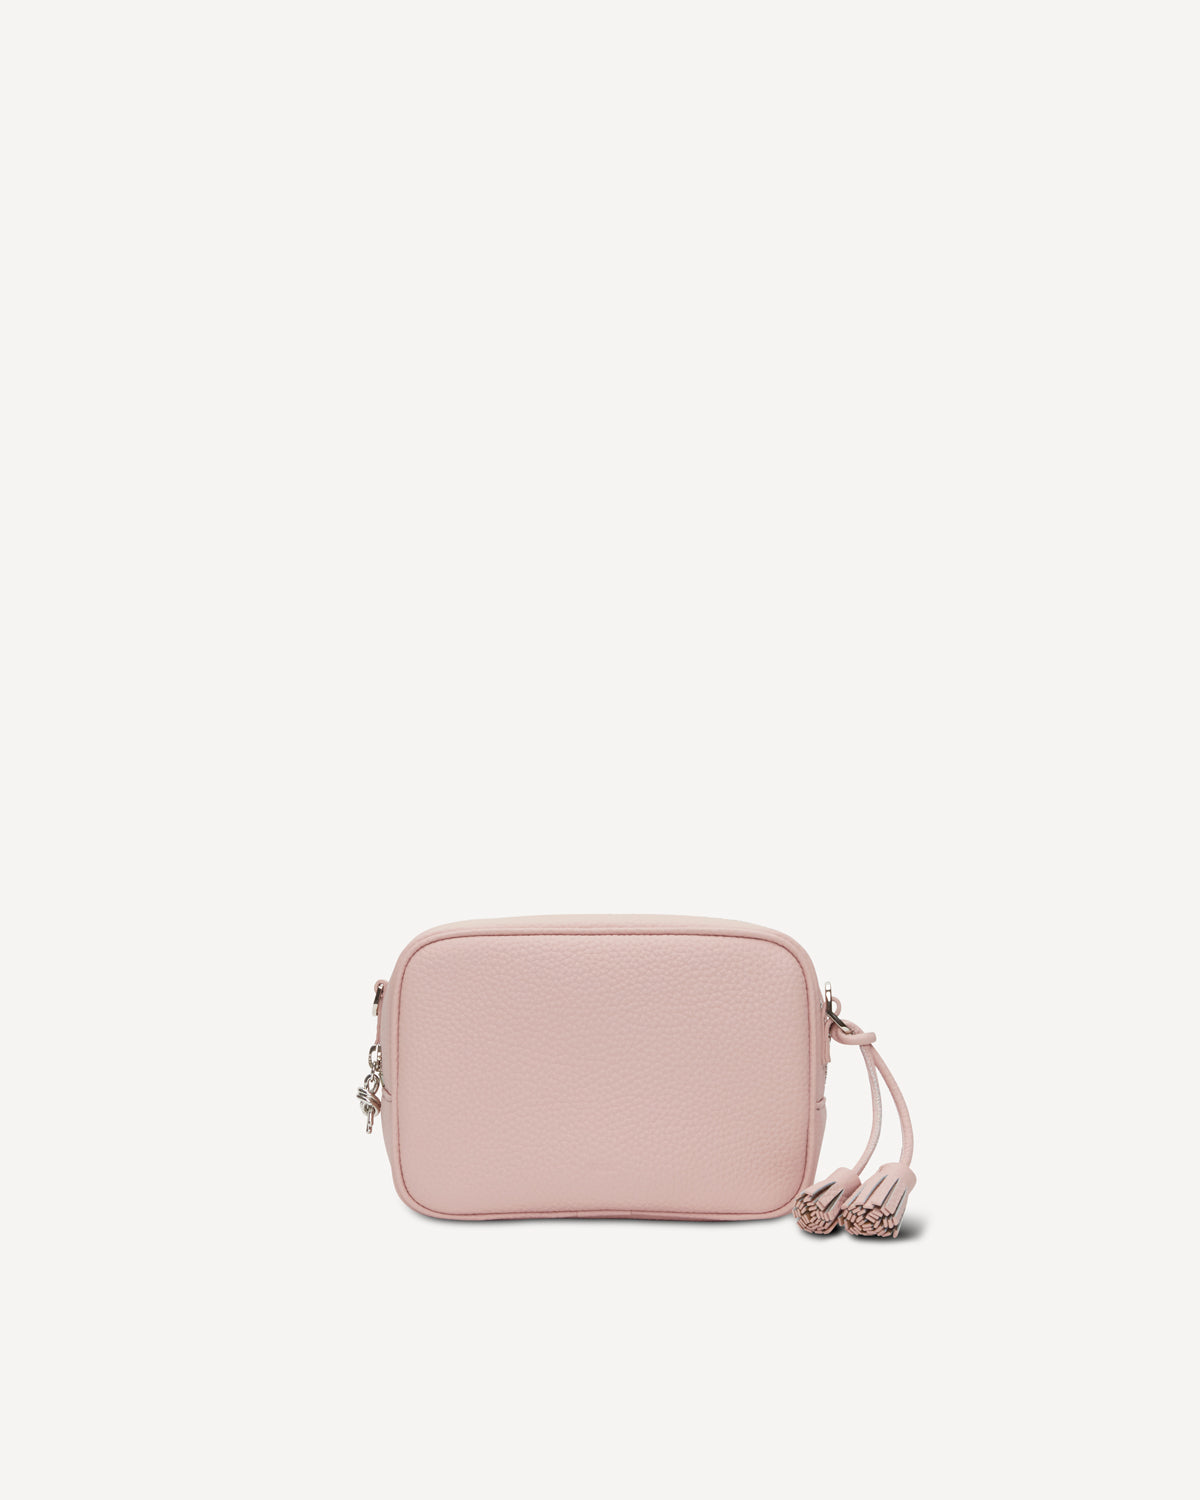 Momo Bags - handtassen, schouder tassen, modieuze tas – Brands By Momo